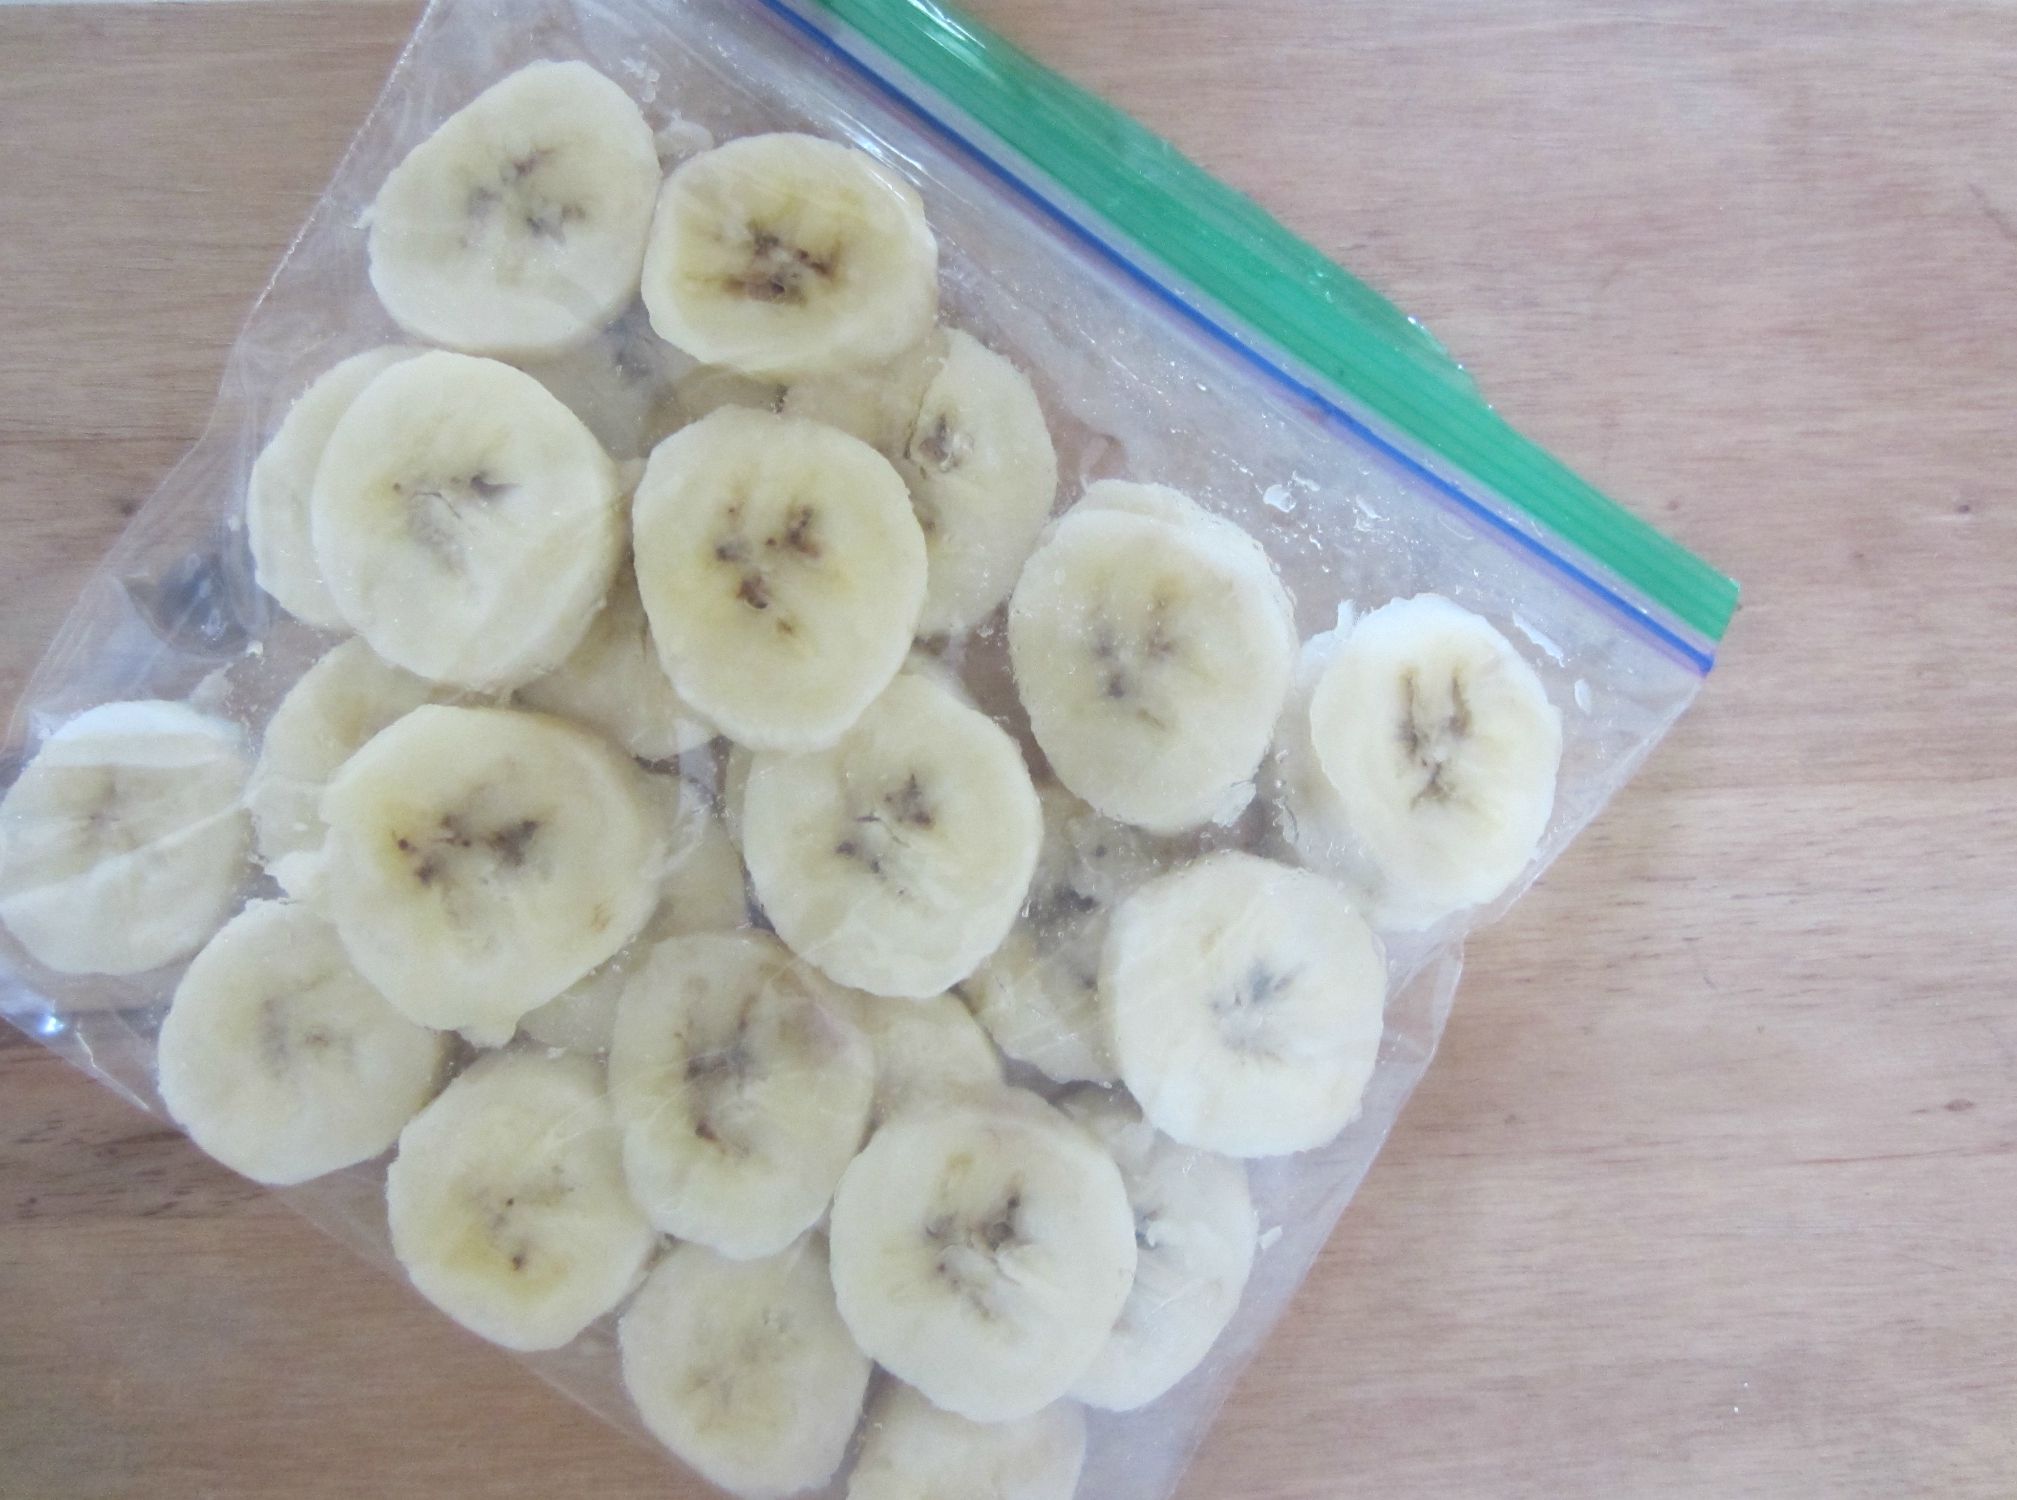 freezing bananas for smoothies